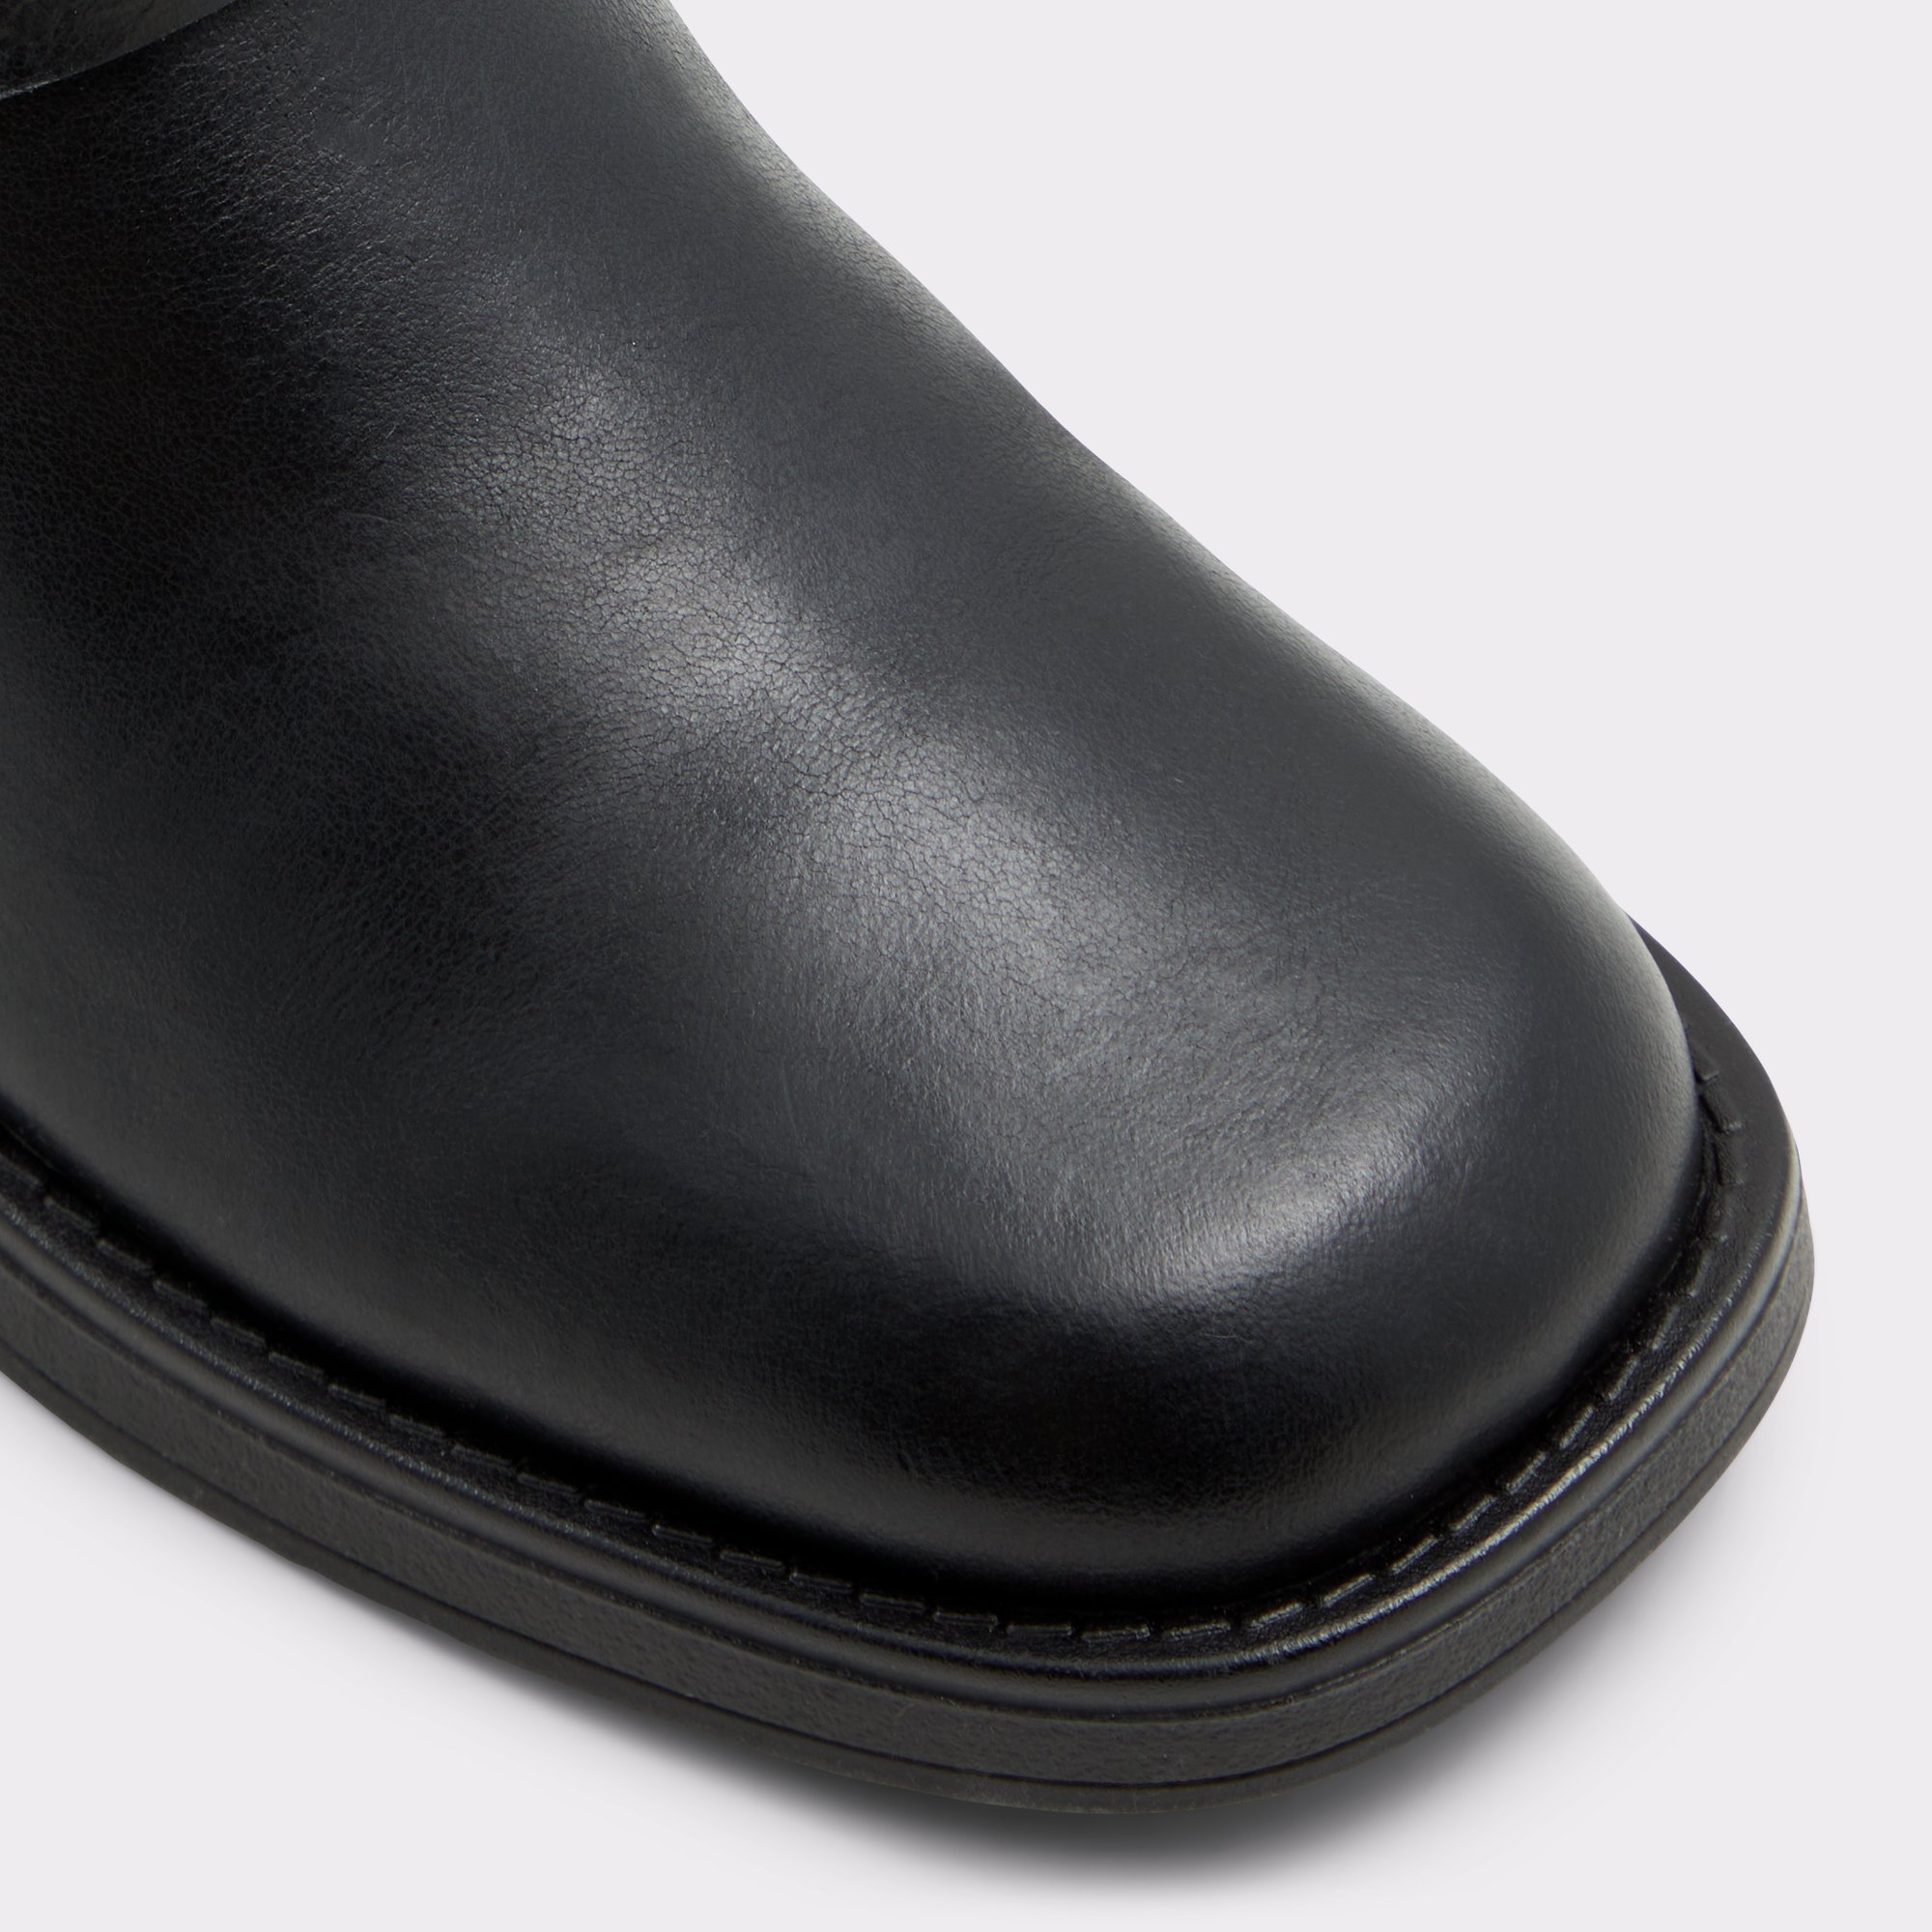 Thrill Black Women's Ankle boots | ALDO Canada